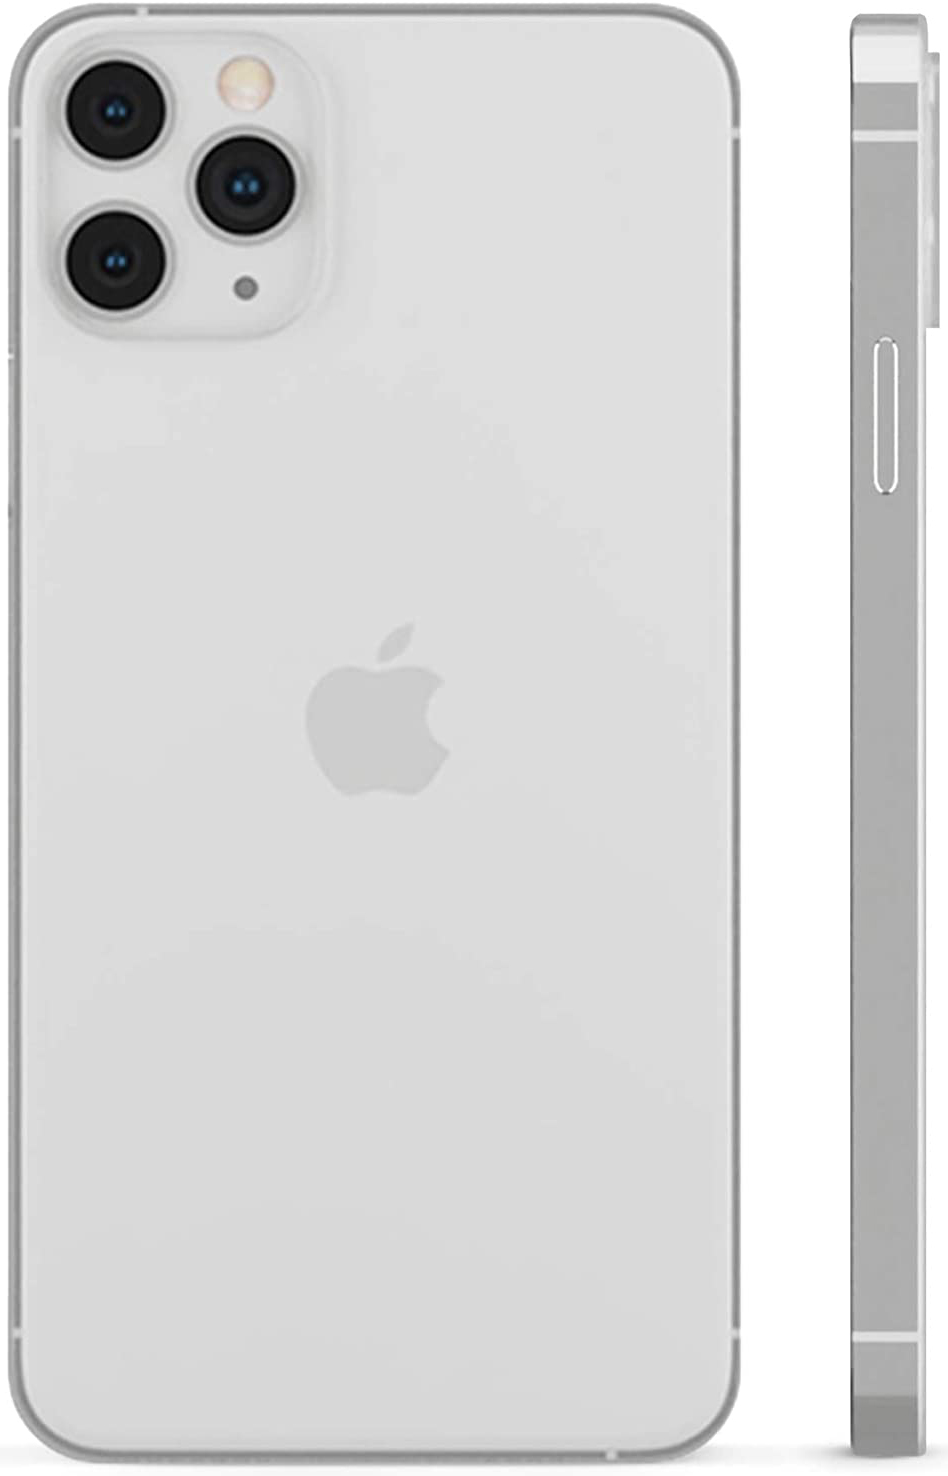 Peel Ultra Thin Iphone 12 Pro Max Case